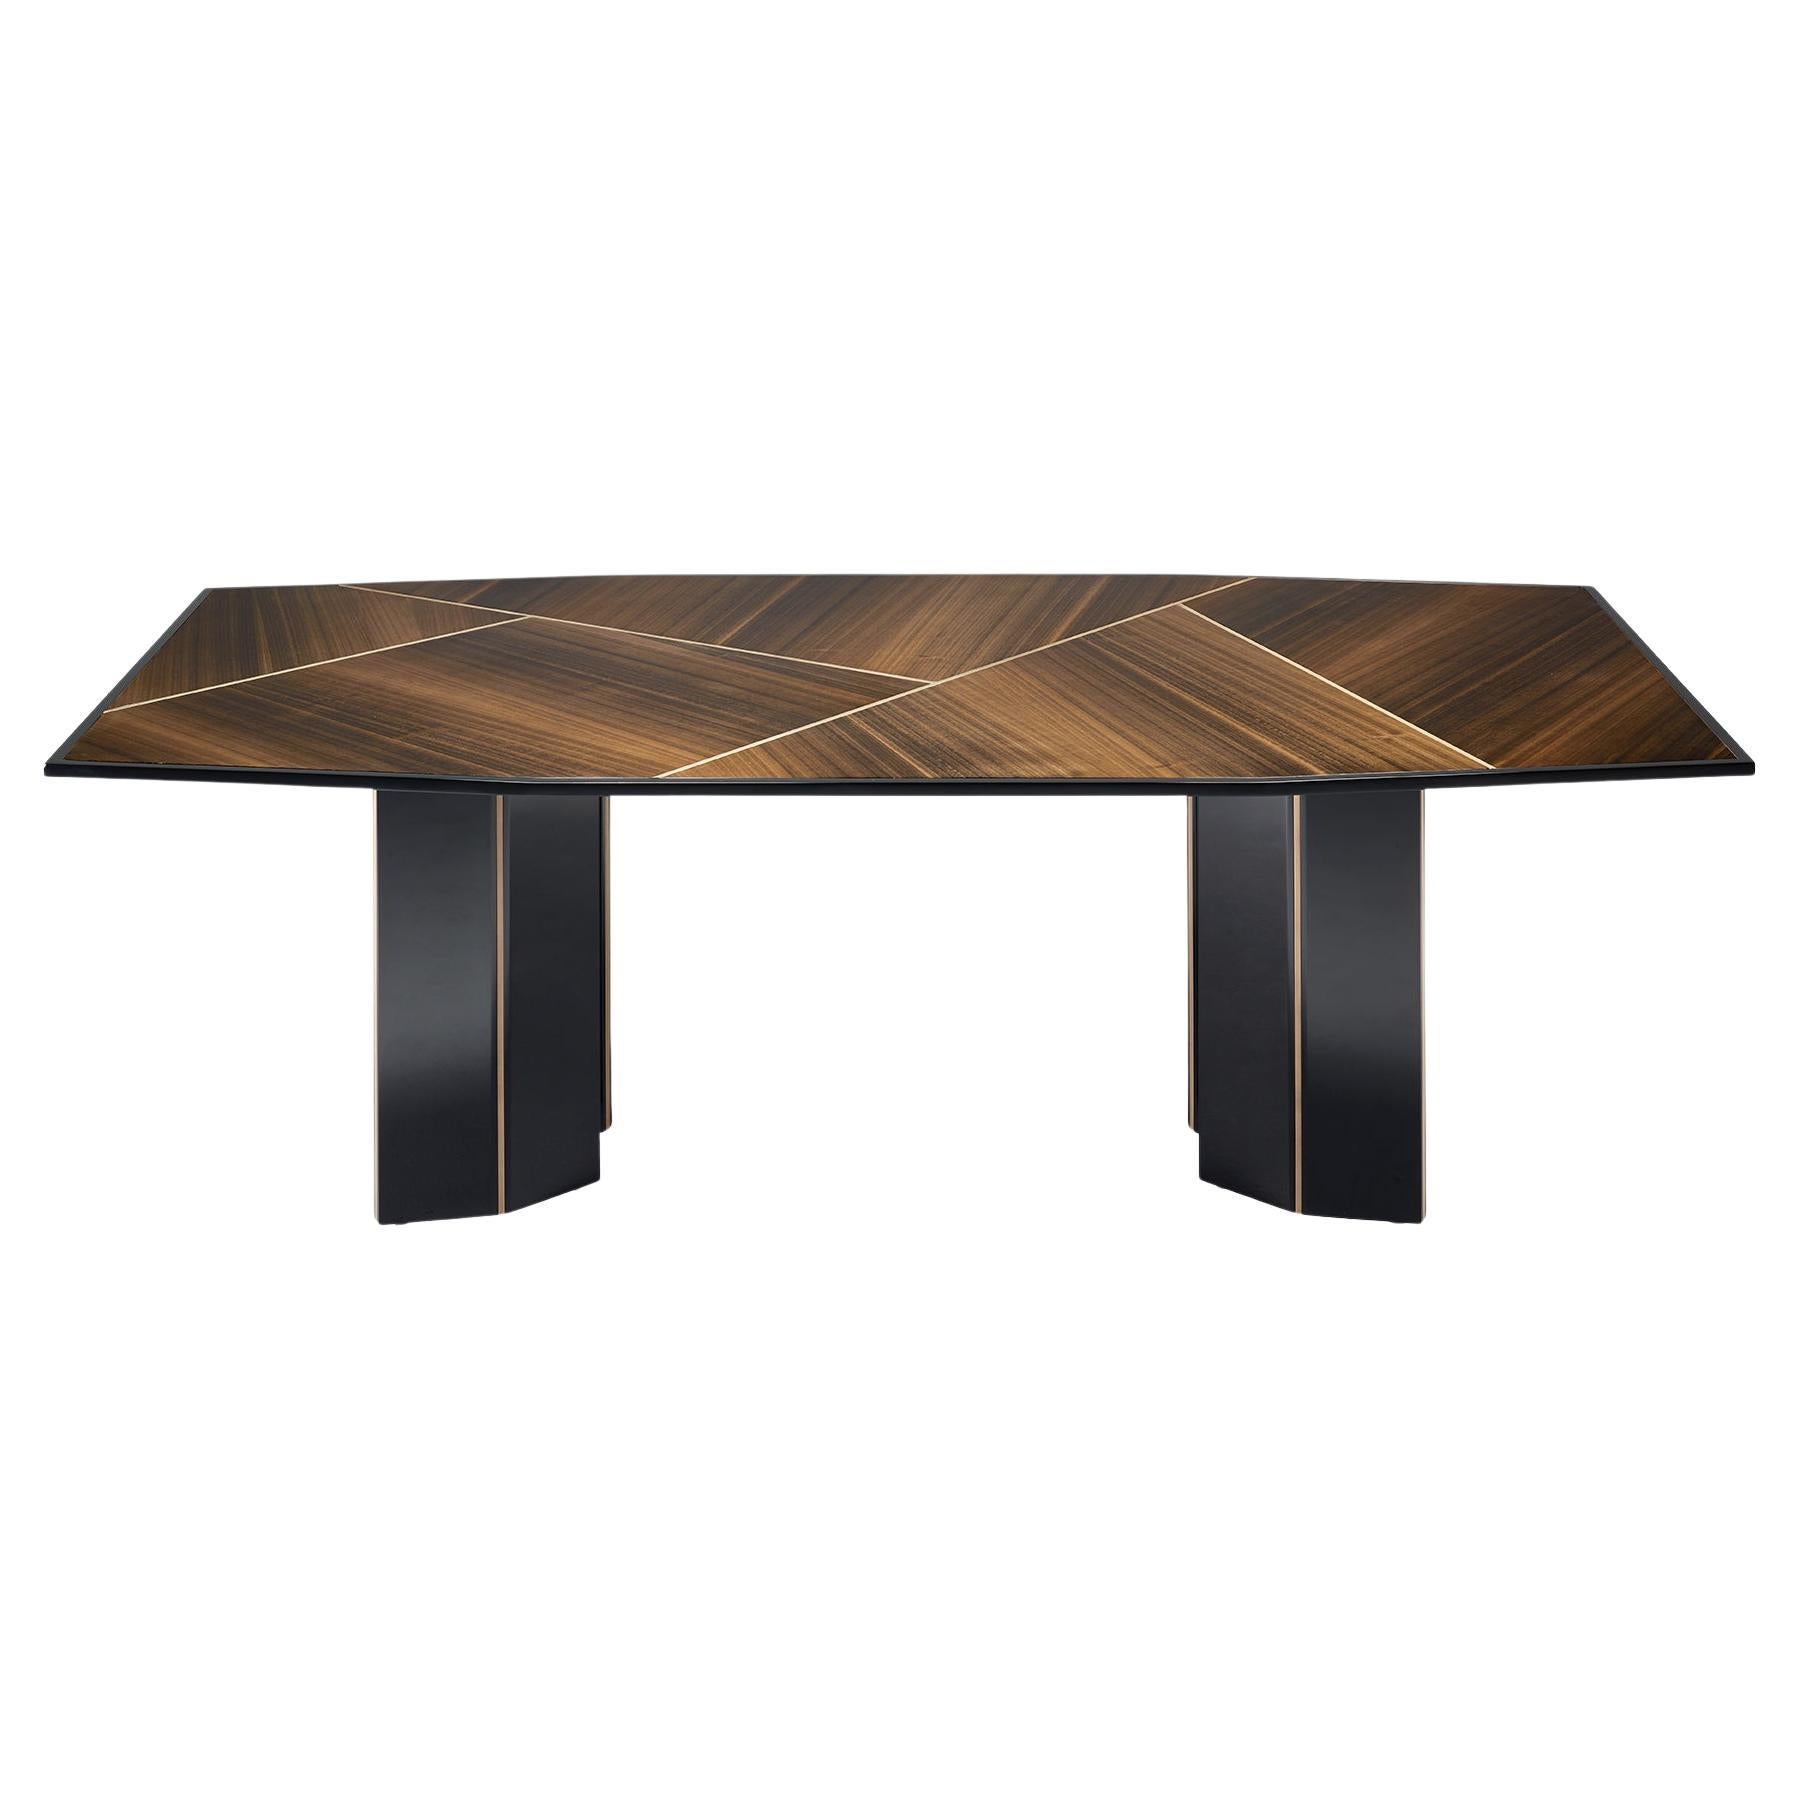 LORCA table in Eucalyptus Fumé and Antique Brass color details For Sale